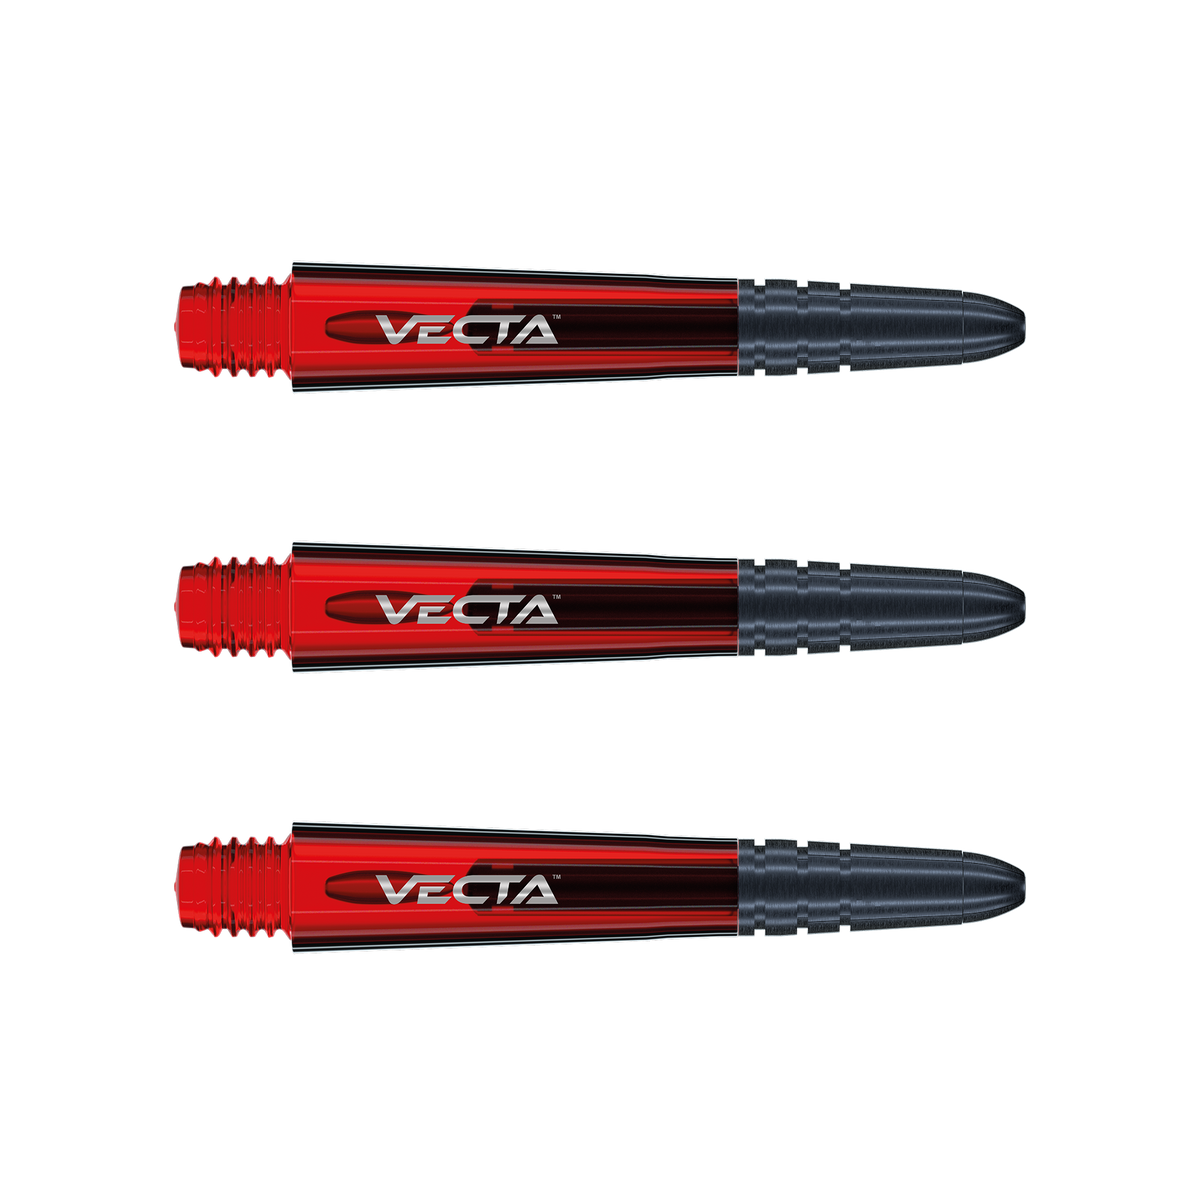 Winmau Vecta Red Darts Shafts